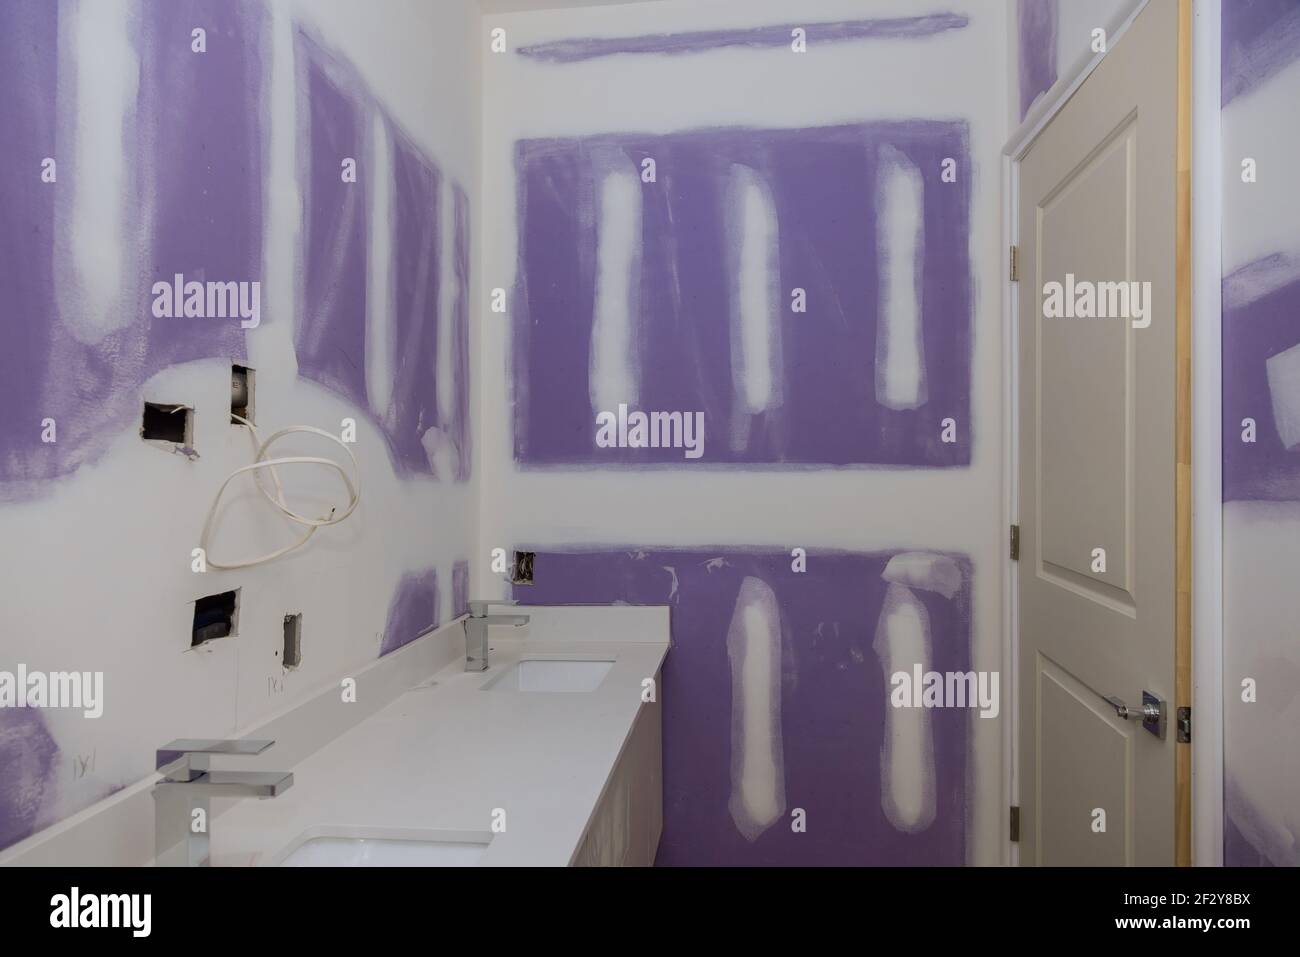 Bathroom with installations bathroom vanity Stock Photo